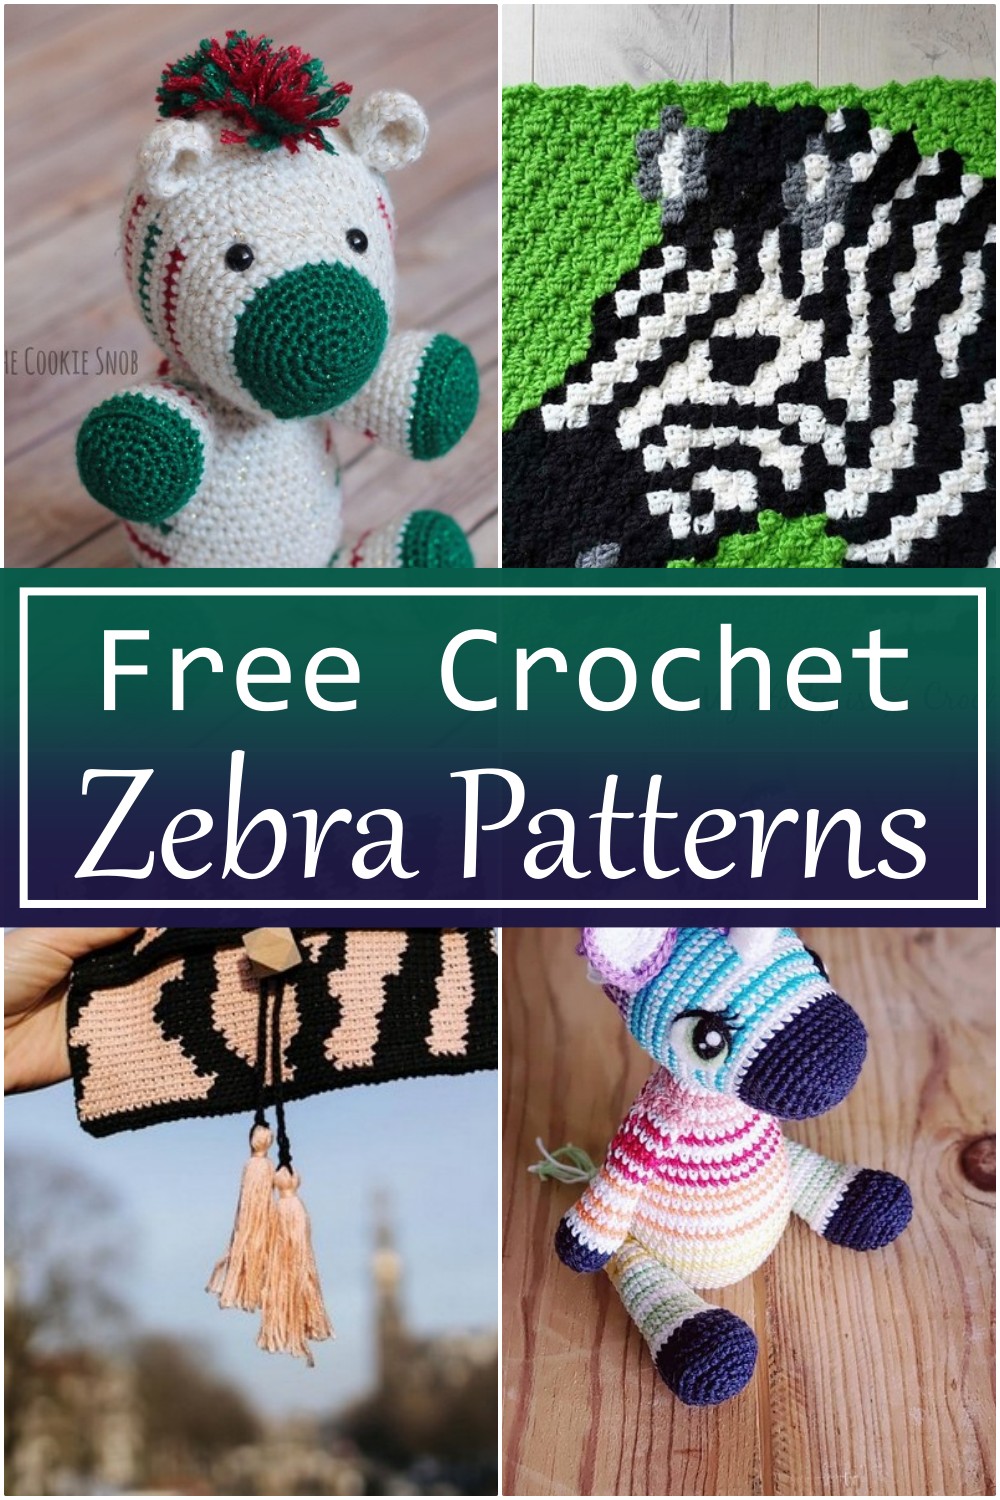 Free Crochet Zebra Patterns To Make Fun Accessories